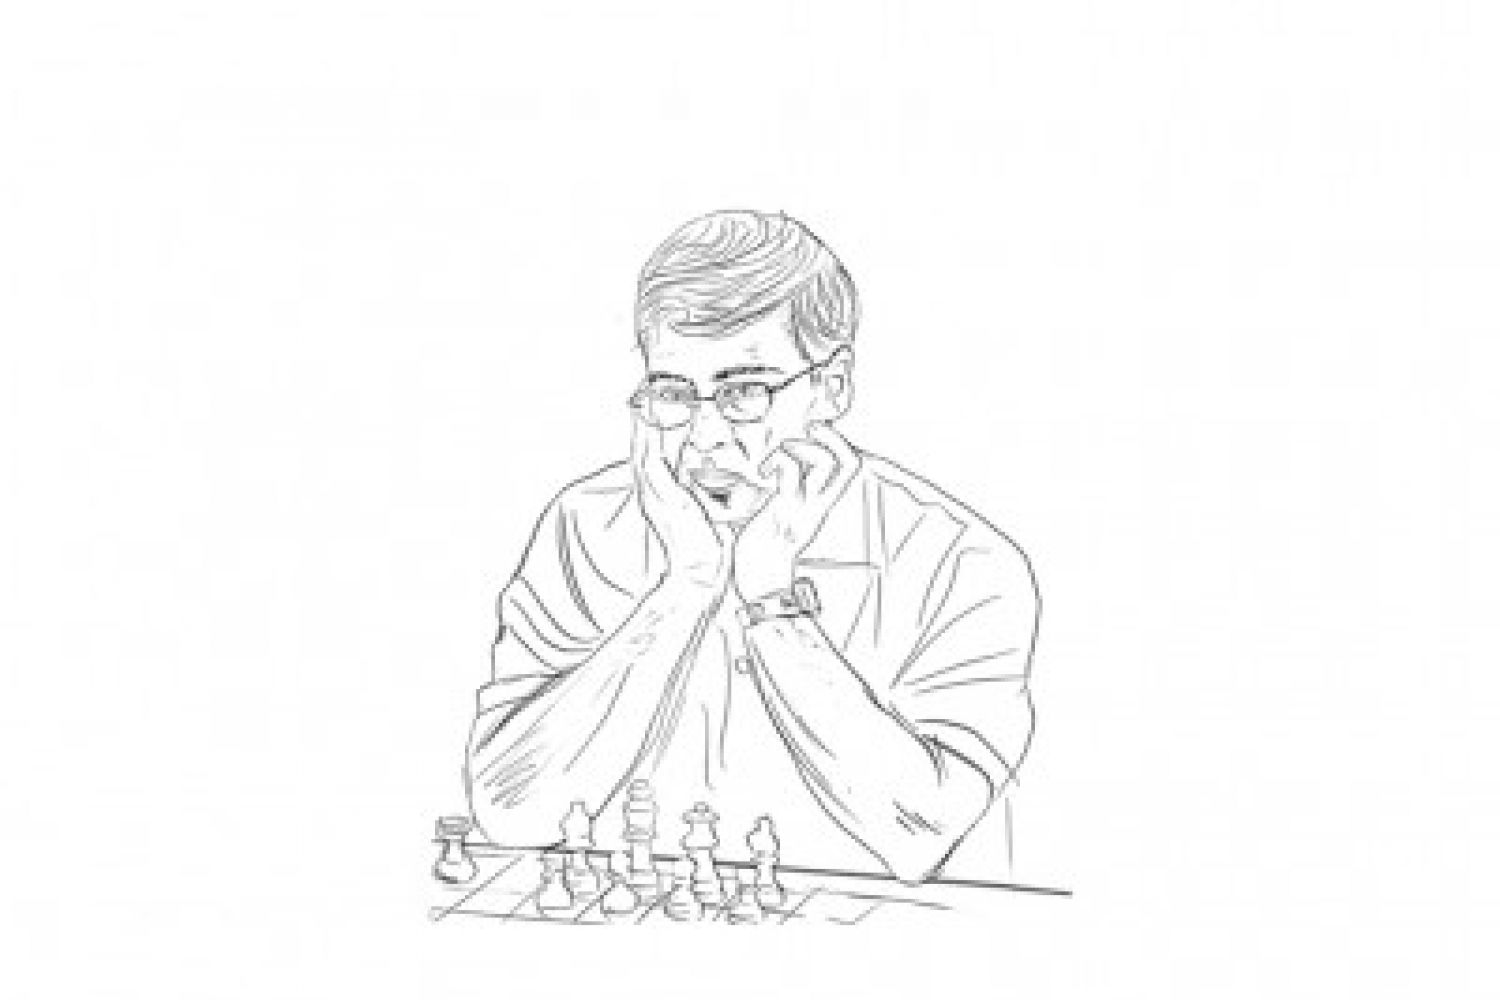 Chess Olympiad Chennai  Vishwanathan Anand drawing 44th chess Olympiad  2022 Ap Art Attack  YouTube